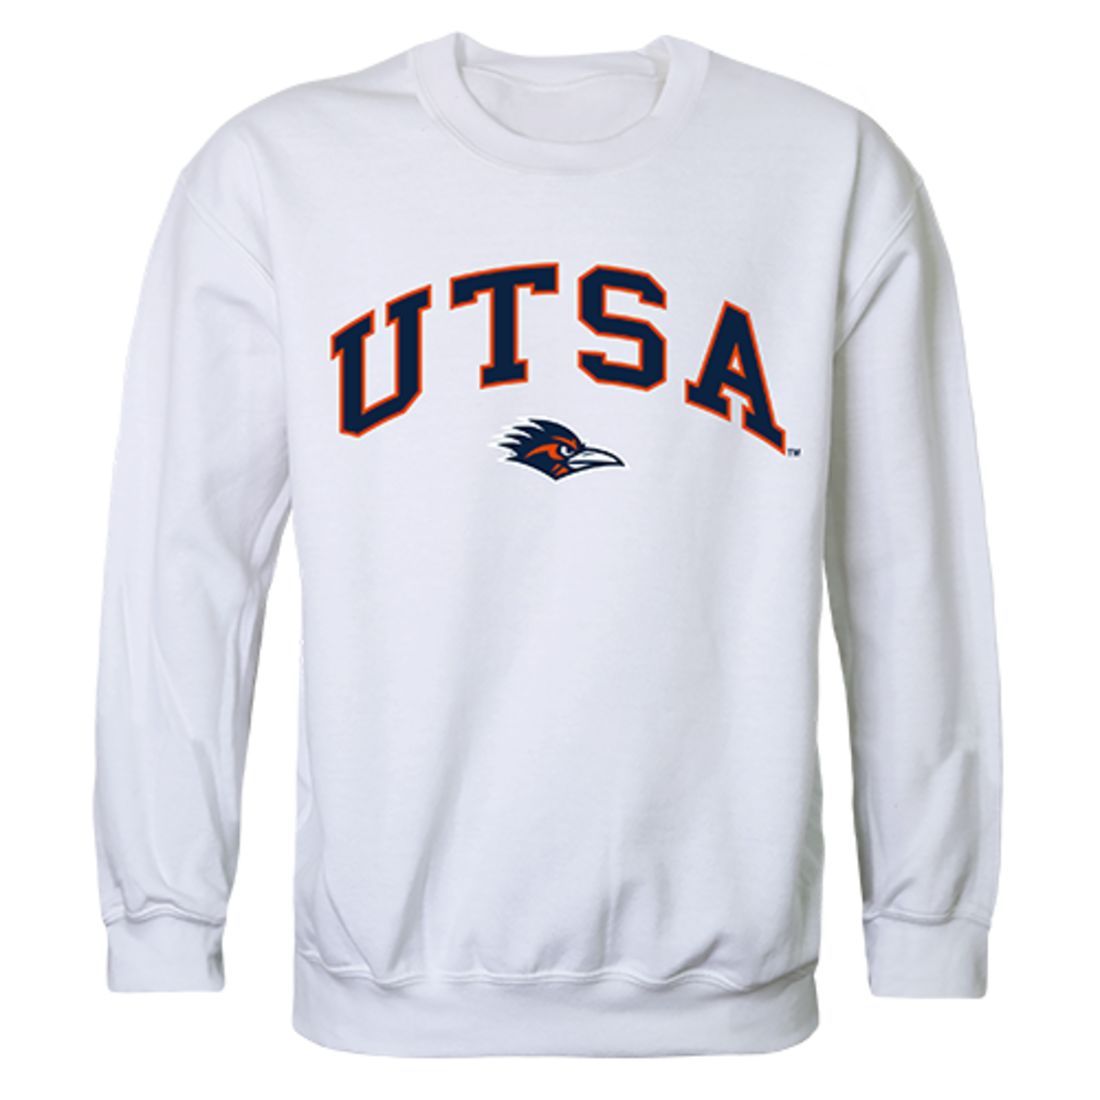 UTSA University of Texas at San Antonio Campus Crewneck Pullover Sweatshirt Sweater White-Campus-Wardrobe